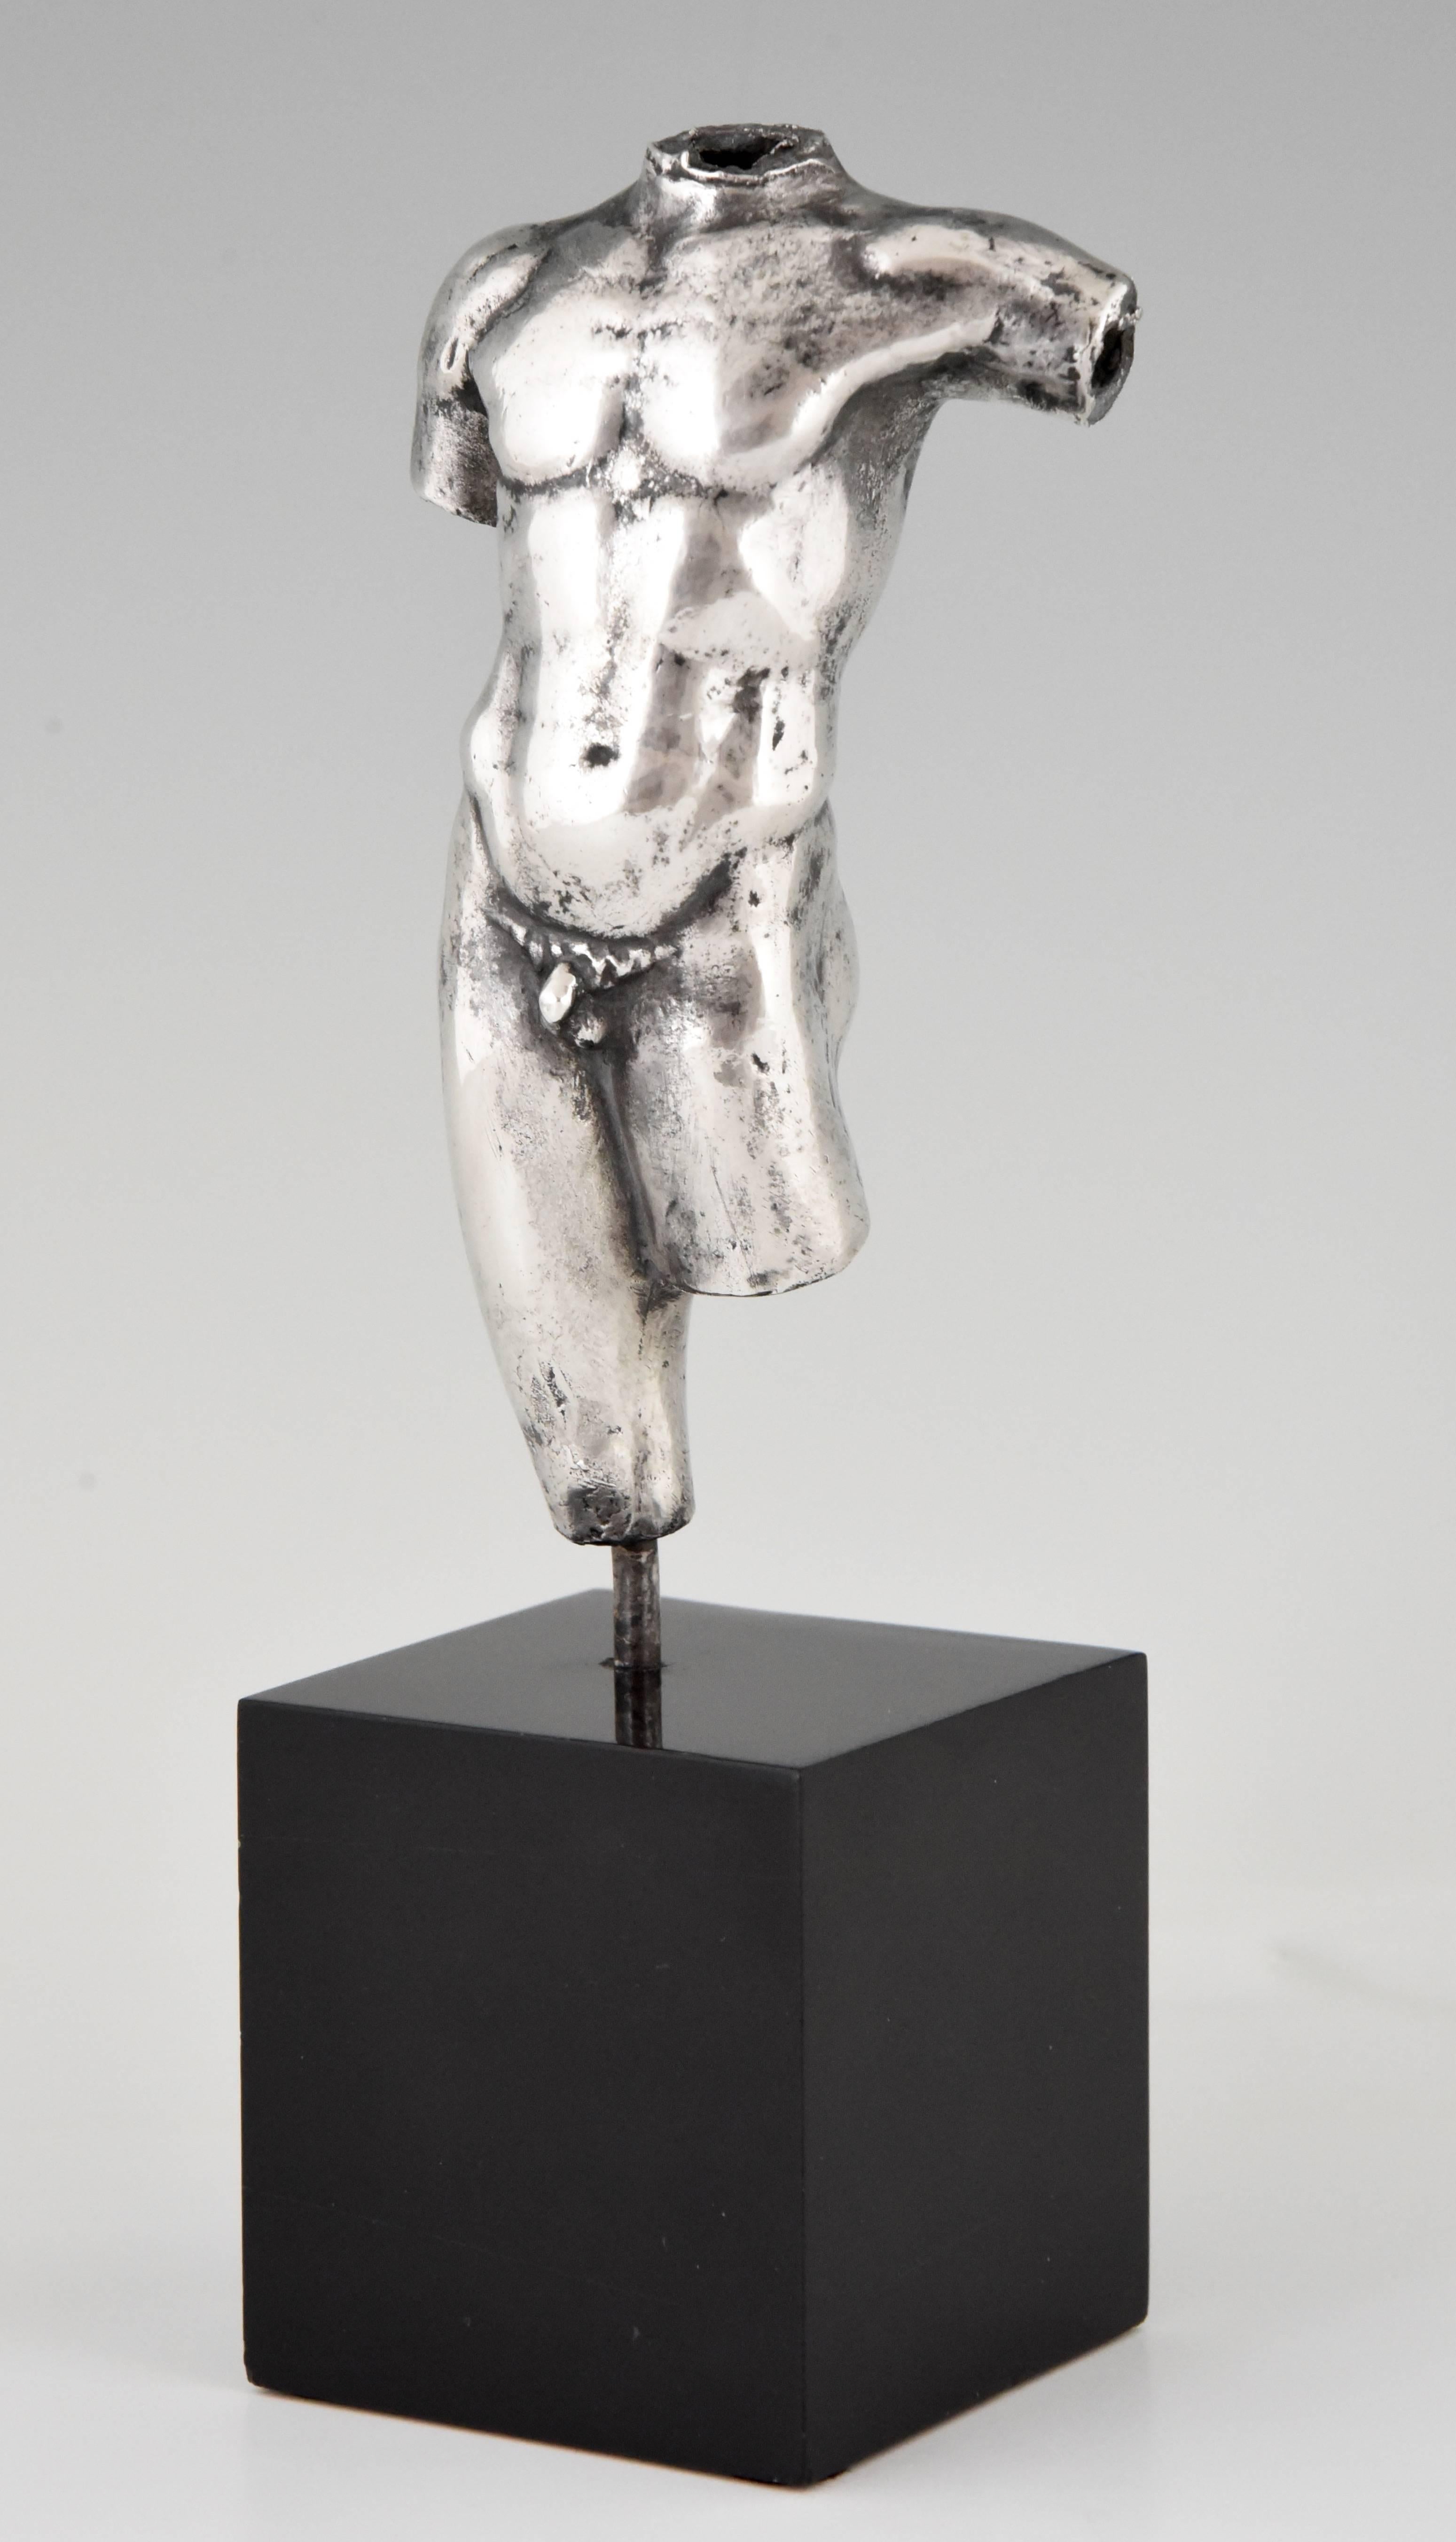 Antique silver sculpture male nude torso,
France, 1900.
Signature/ marks: Silver guarantee mark Minerve? & Makers Mark. ?
Date: 1900
Material: Silver on black marble base.
Origin: France.
Size: H. 23.5 cm. x L. 8 cm. x W. 7 cm.
H. 9.3 inch x